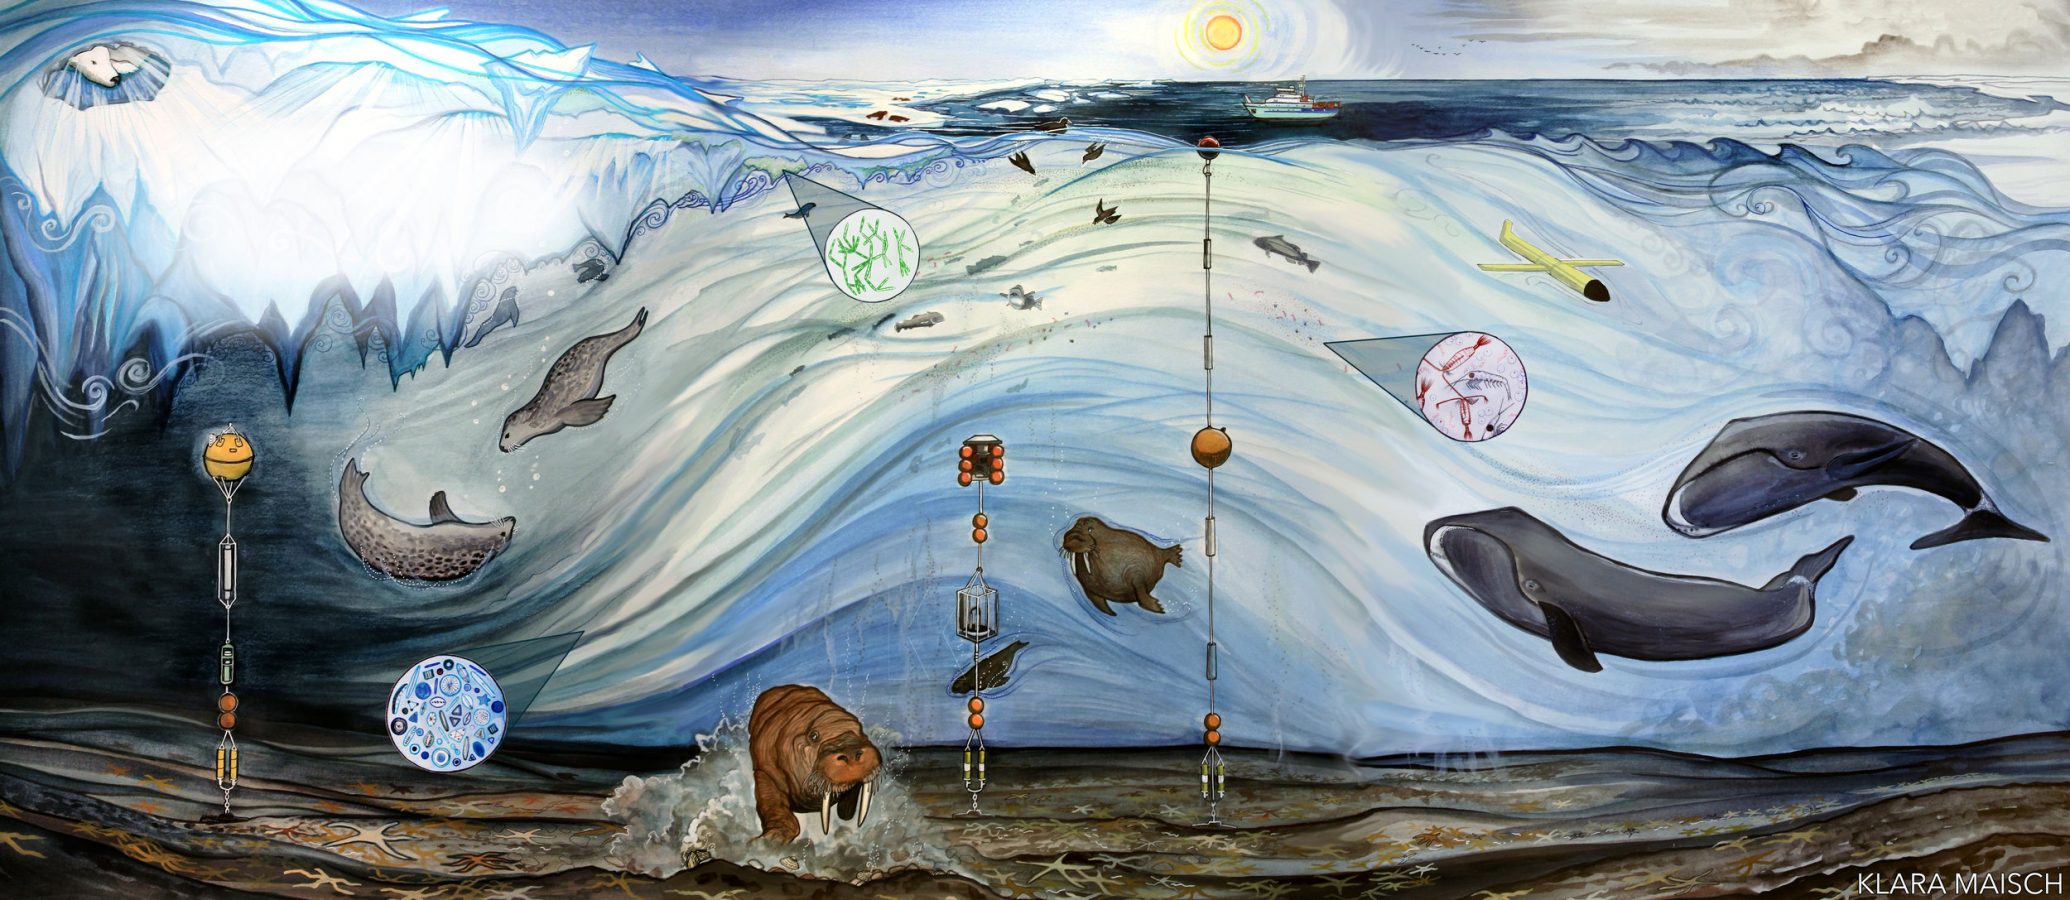 Image by Klara Maisch. Klara Maisch painted this seascape to illustrate seasonal variability in the Chukchi Sea.